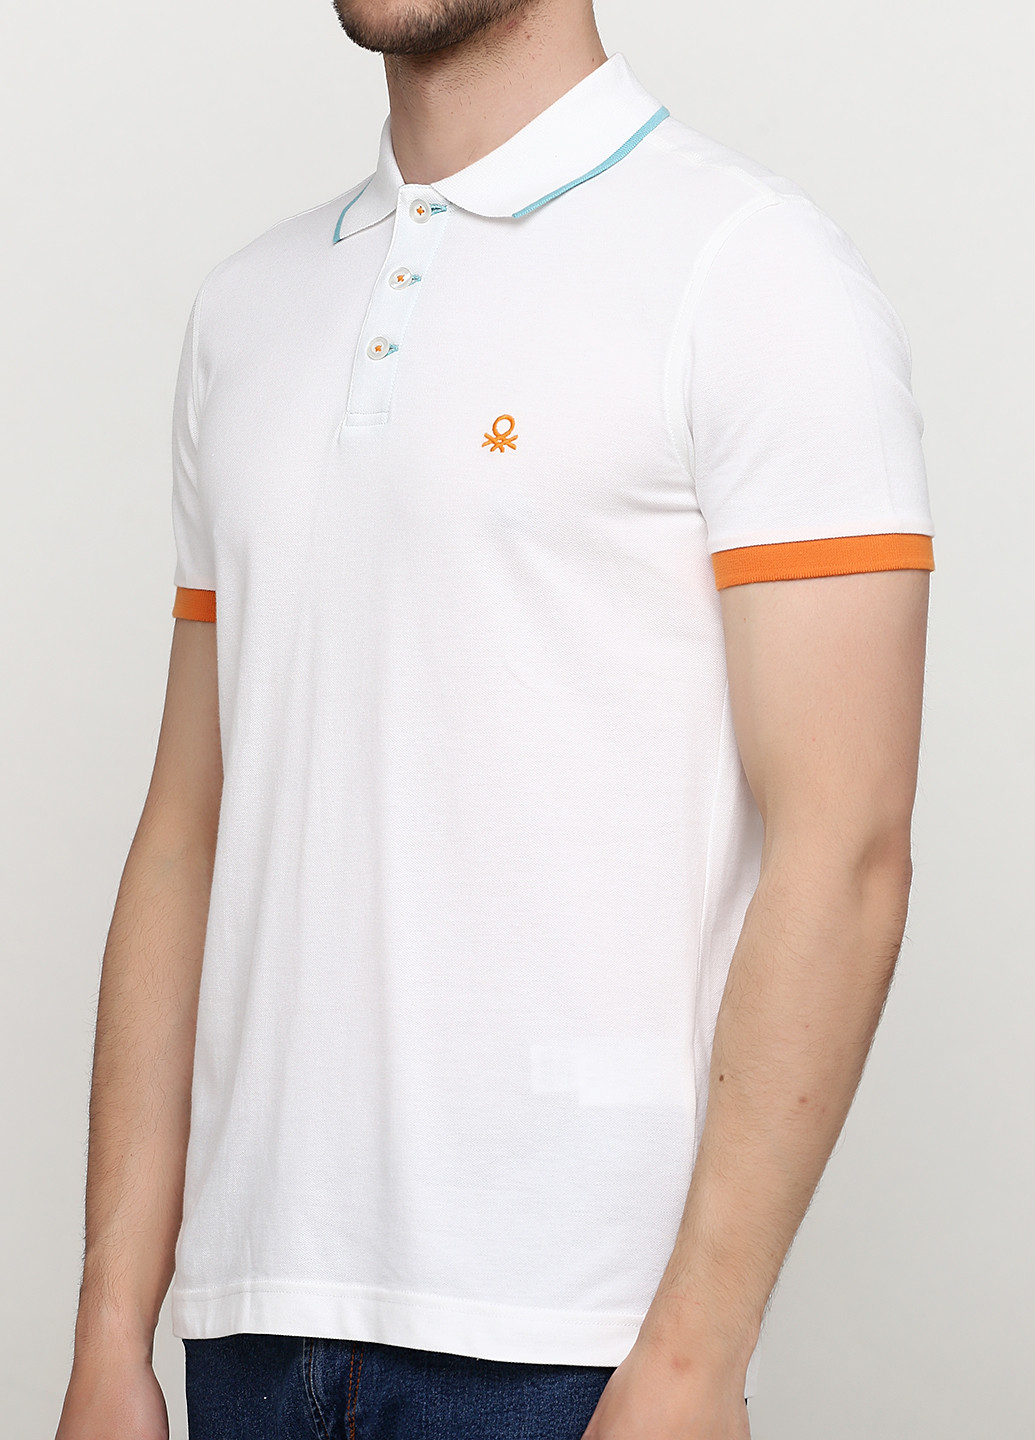 Белая футболка-поло для мужчин United Colors of Benetton с логотипом